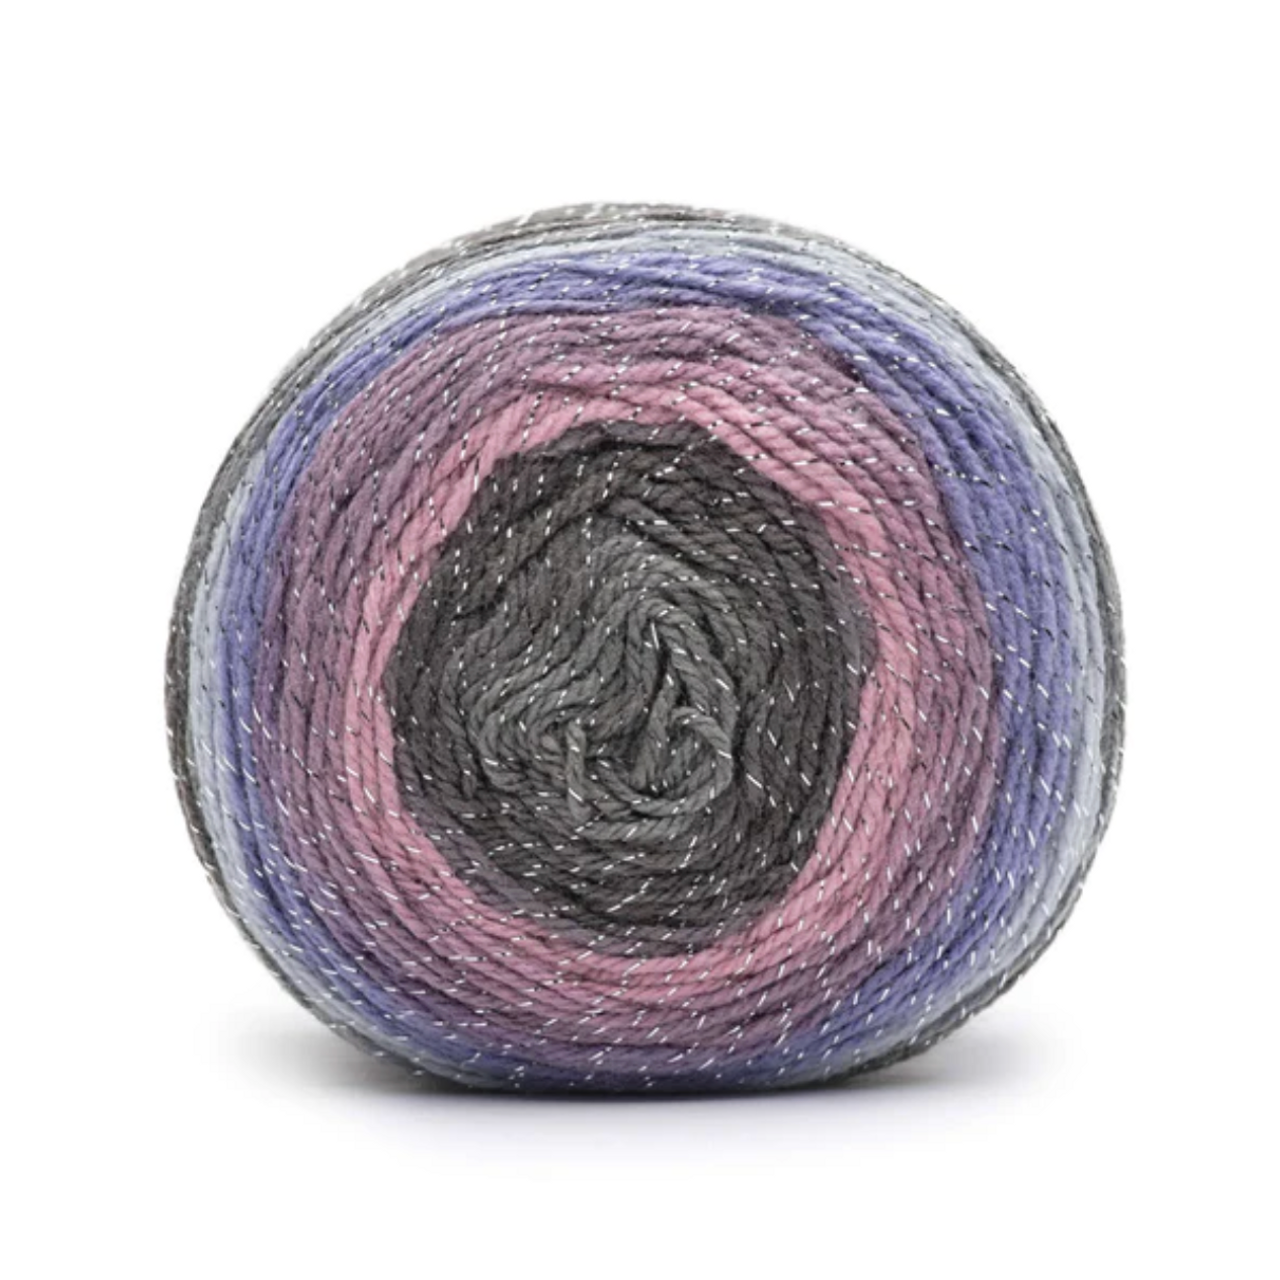 Red Heart Roll With It Sparkle Grey Whisper Knitting & Crochet Yarn